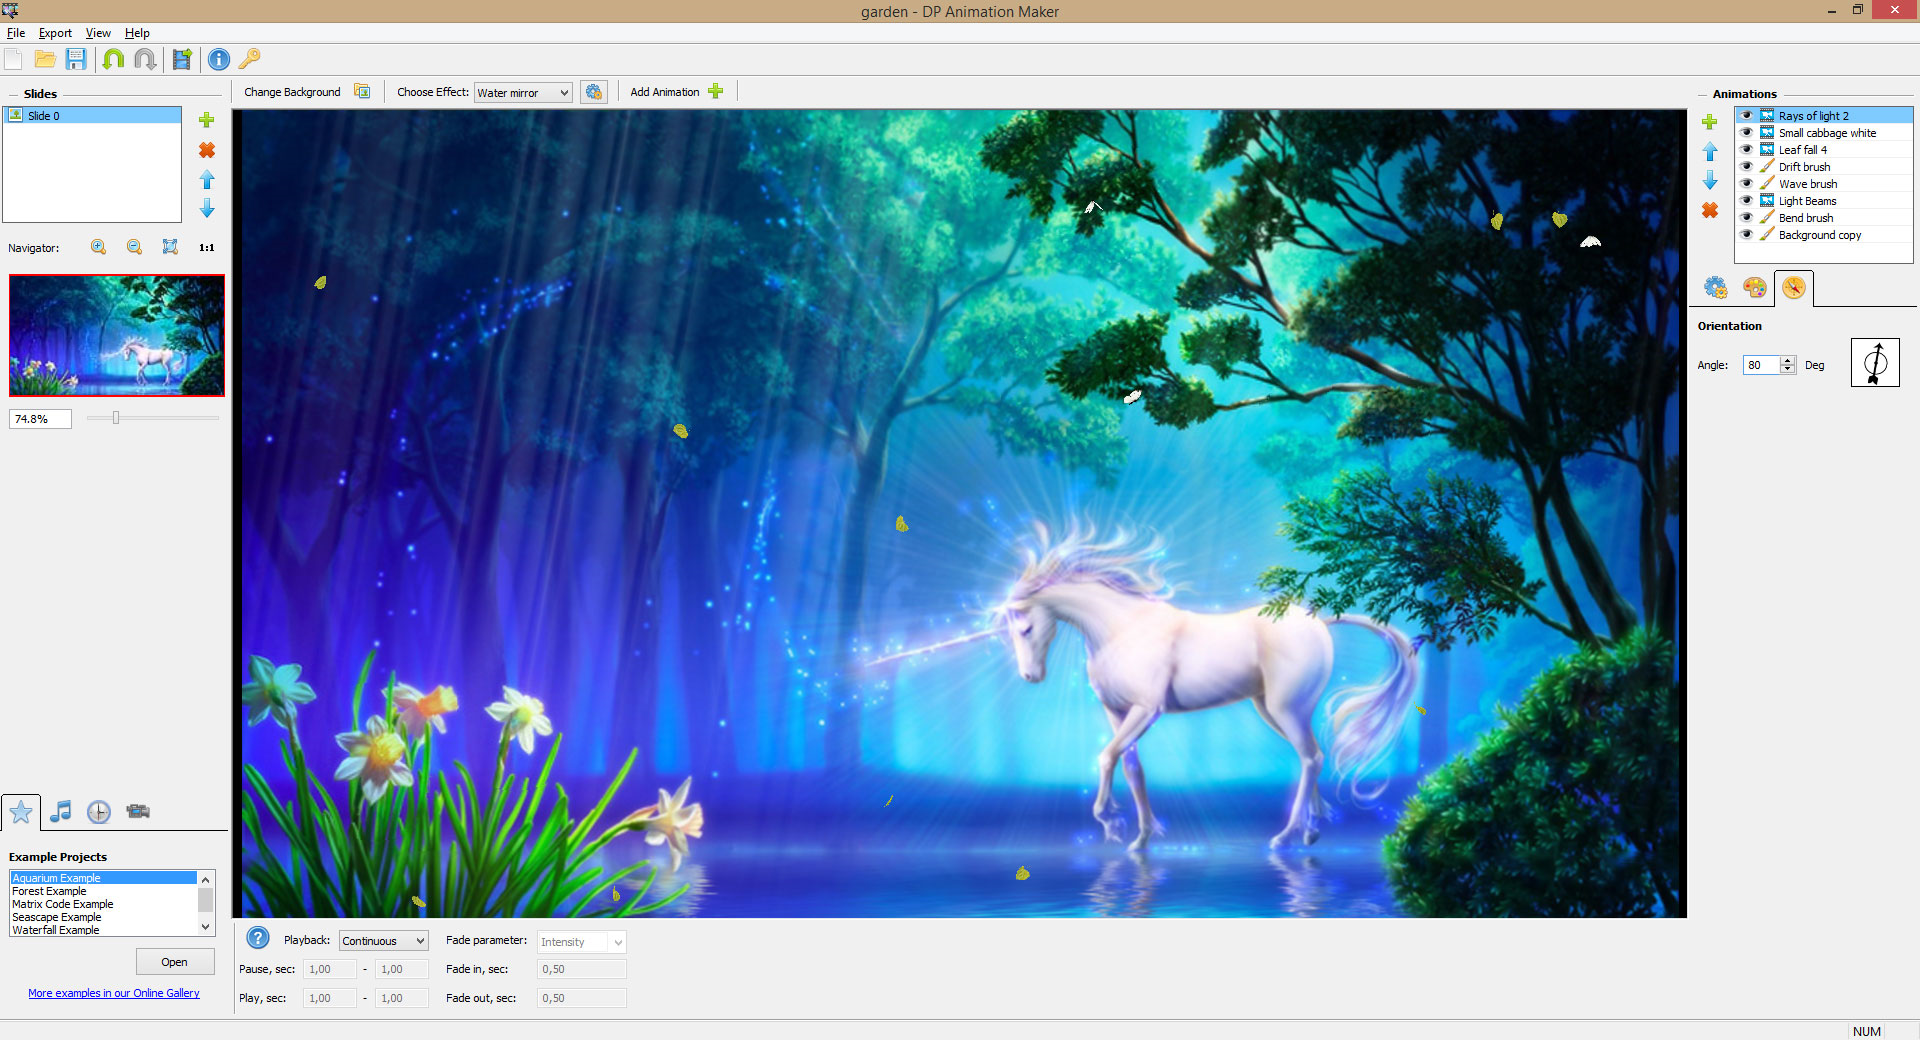 instaling DP Animation Maker 3.5.19